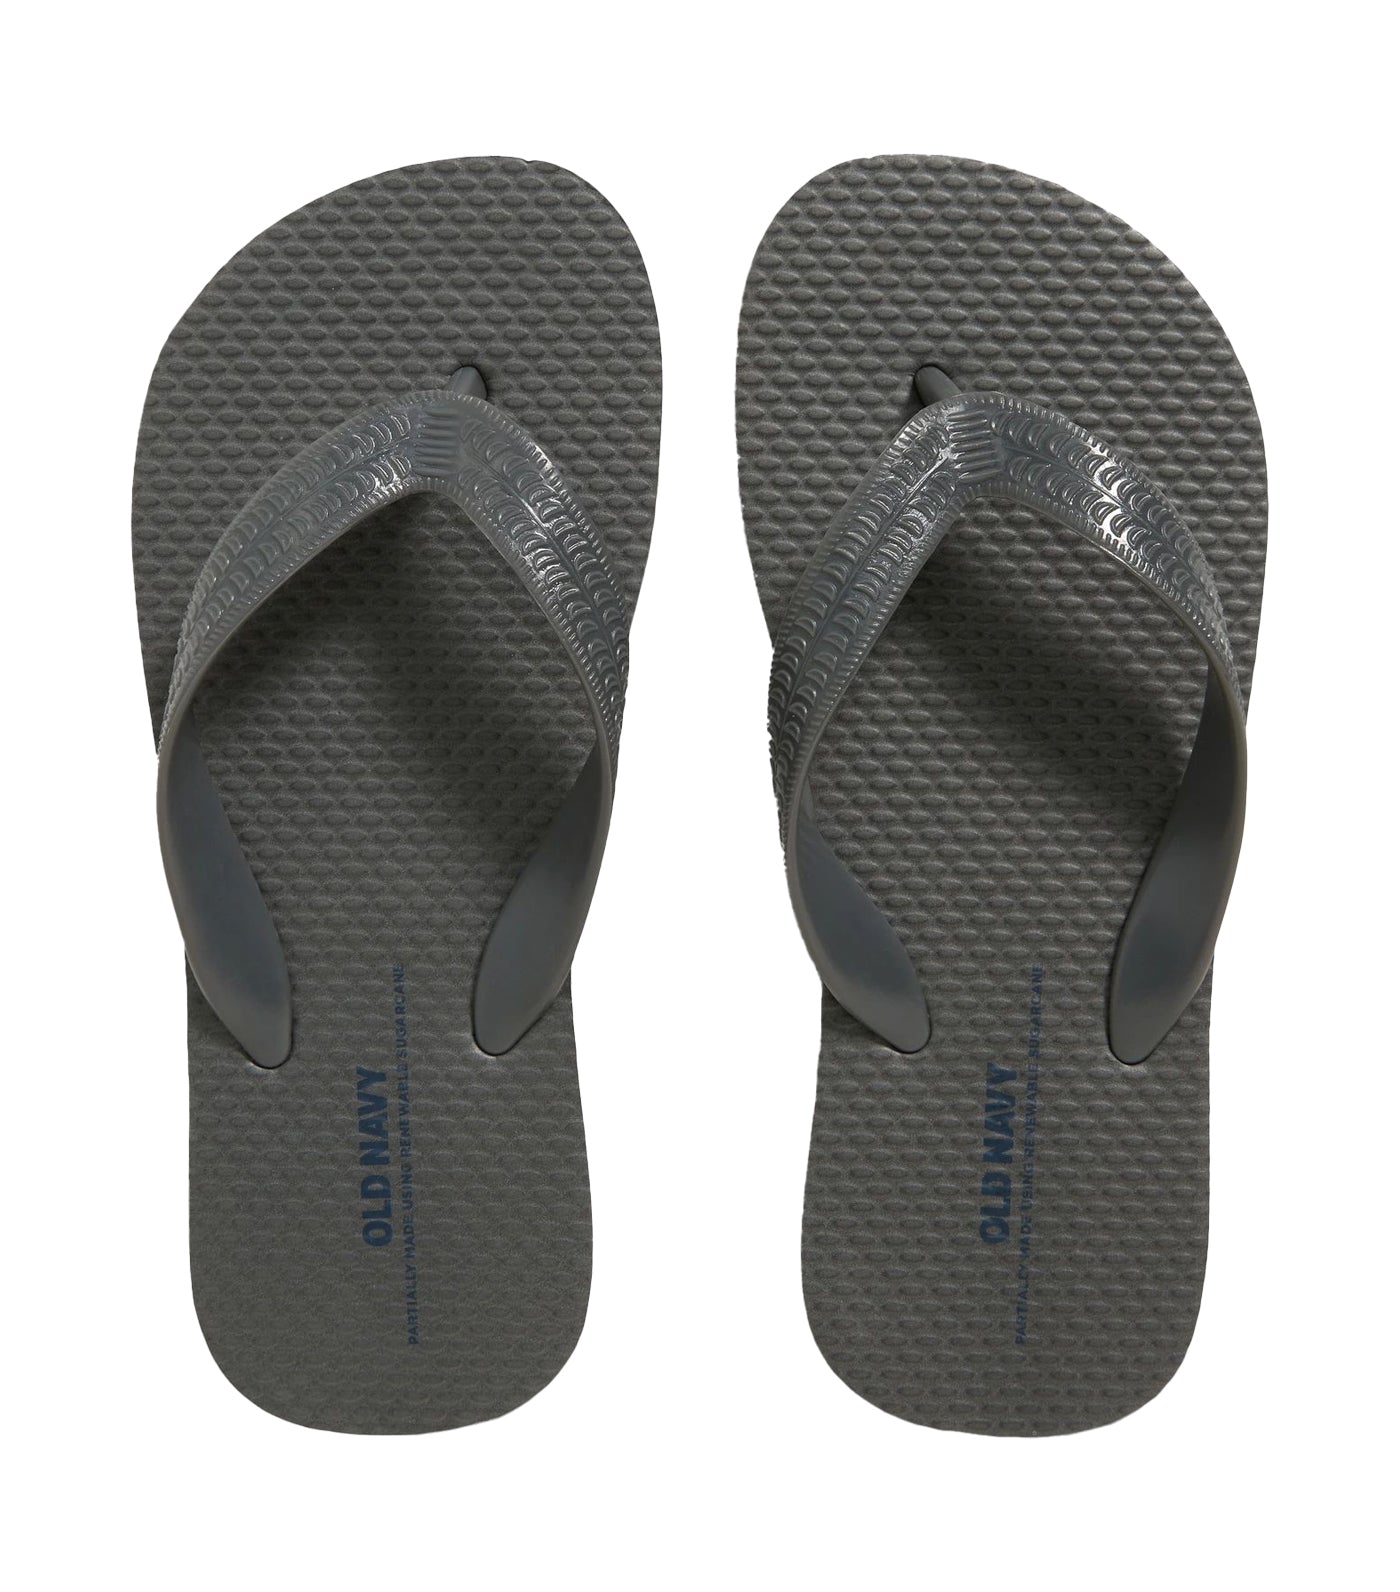 Flip-Flop Sandals (Partially Plant-Based)